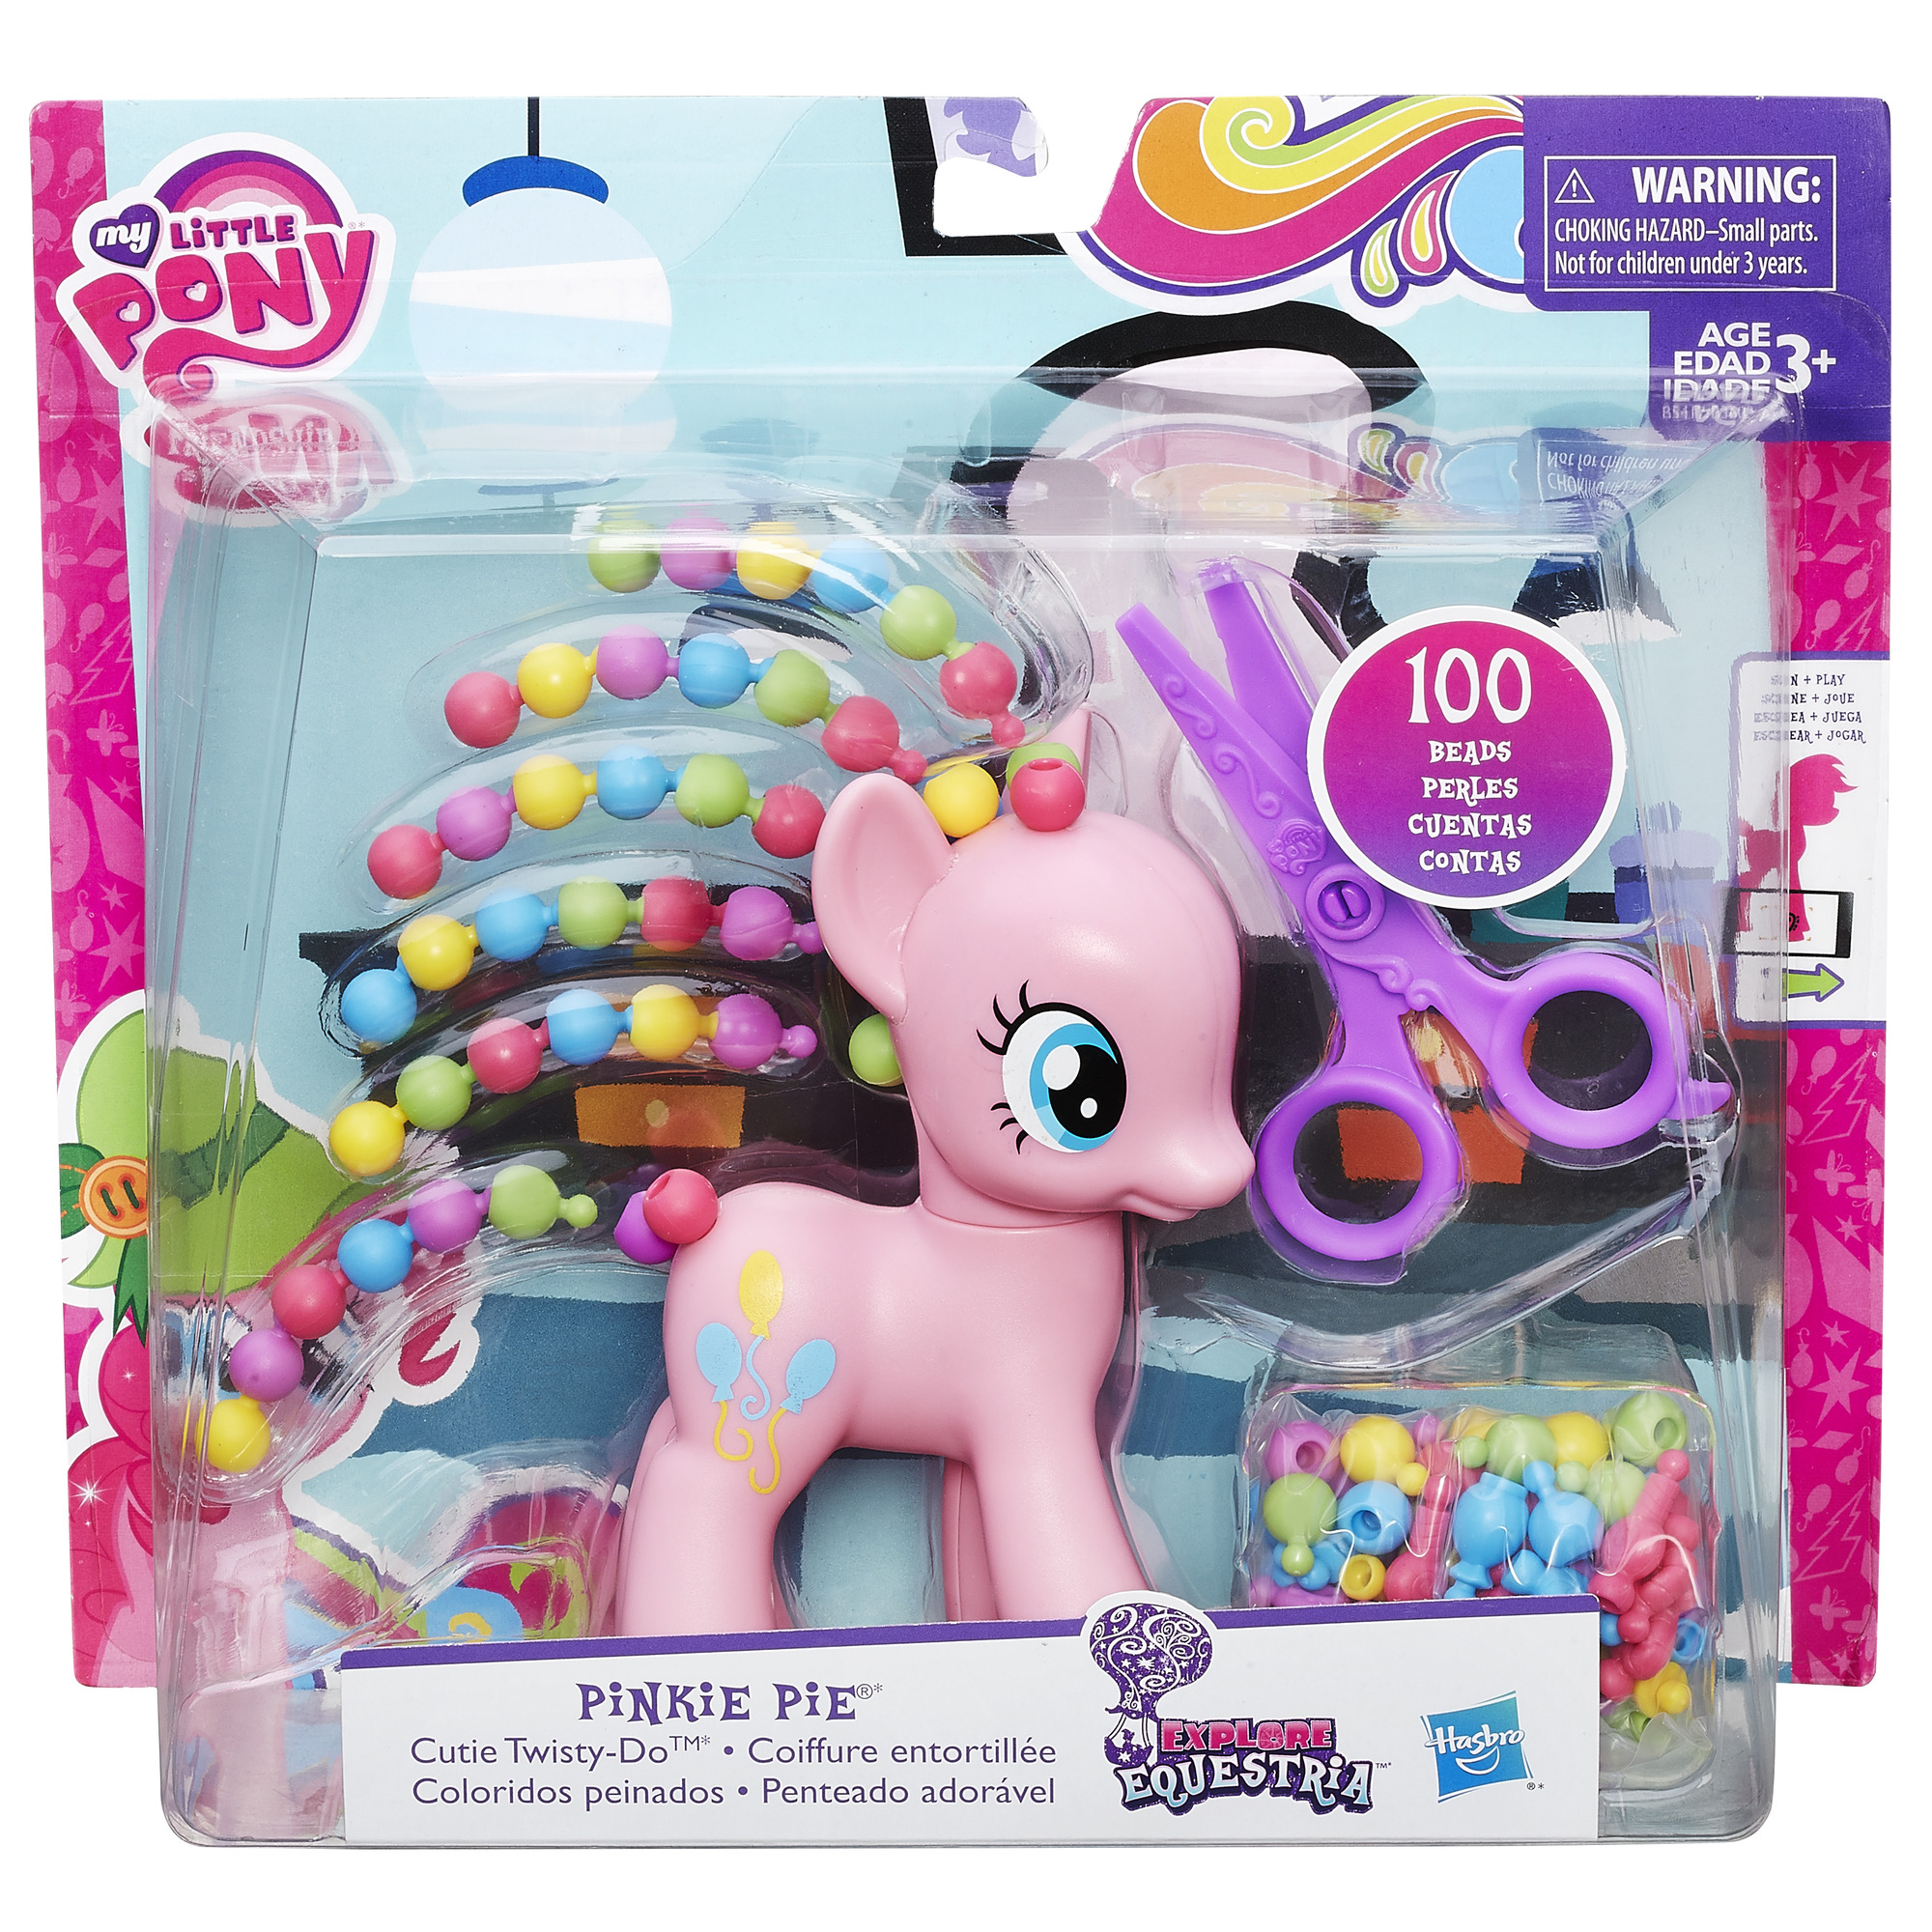 My Little Pony Friendship is Magic Cutie Twisty-Do Pinkie Pie Figure - image 2 of 6